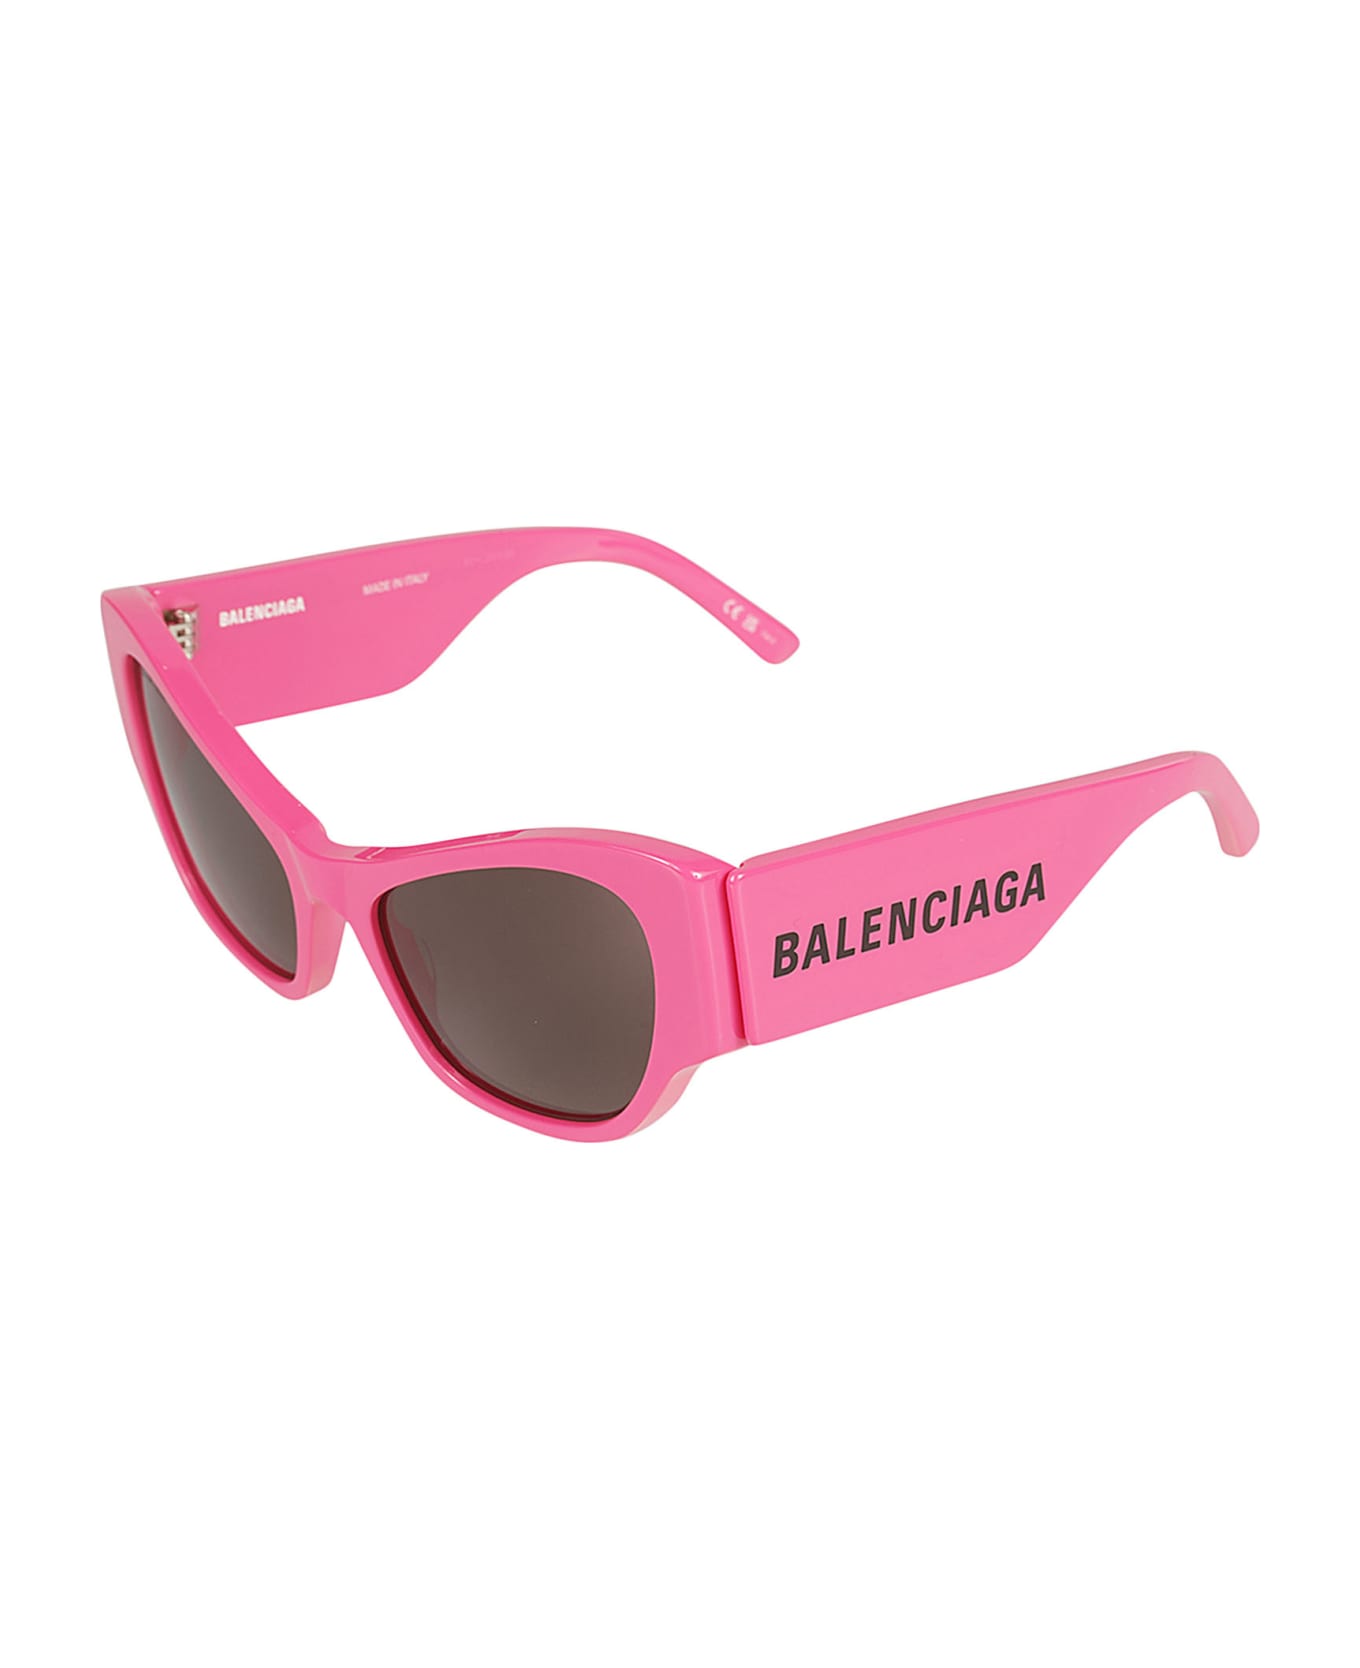 Balenciaga Eyewear Logo Sided Sunglasses - Fuchsia/Grey サングラス